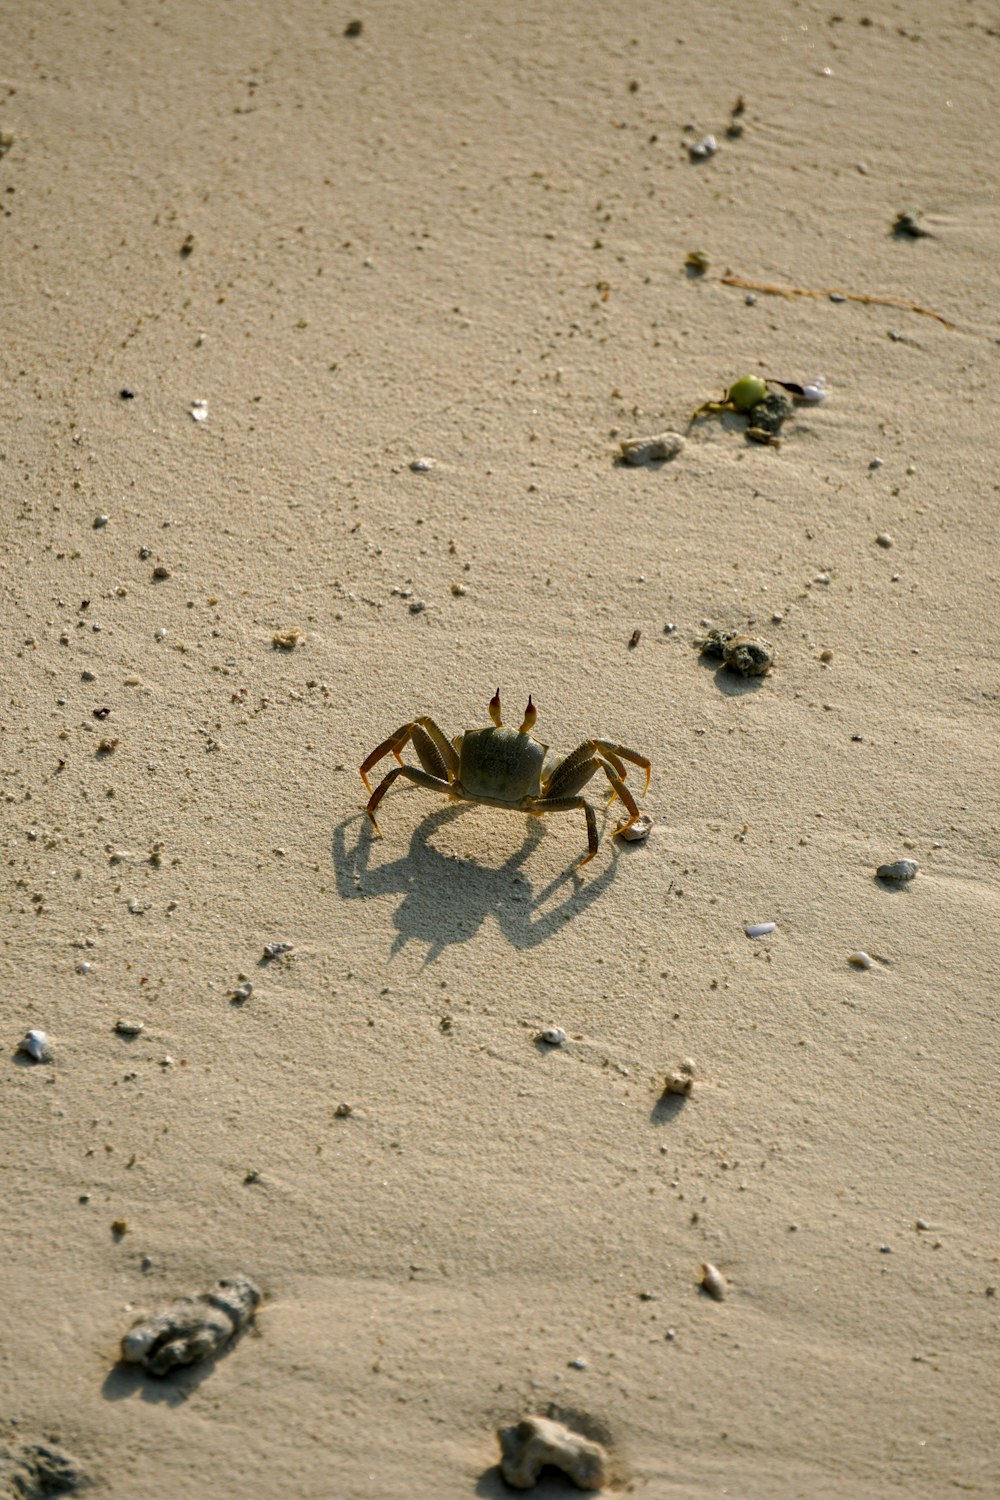 a crab walking across a sandy beach